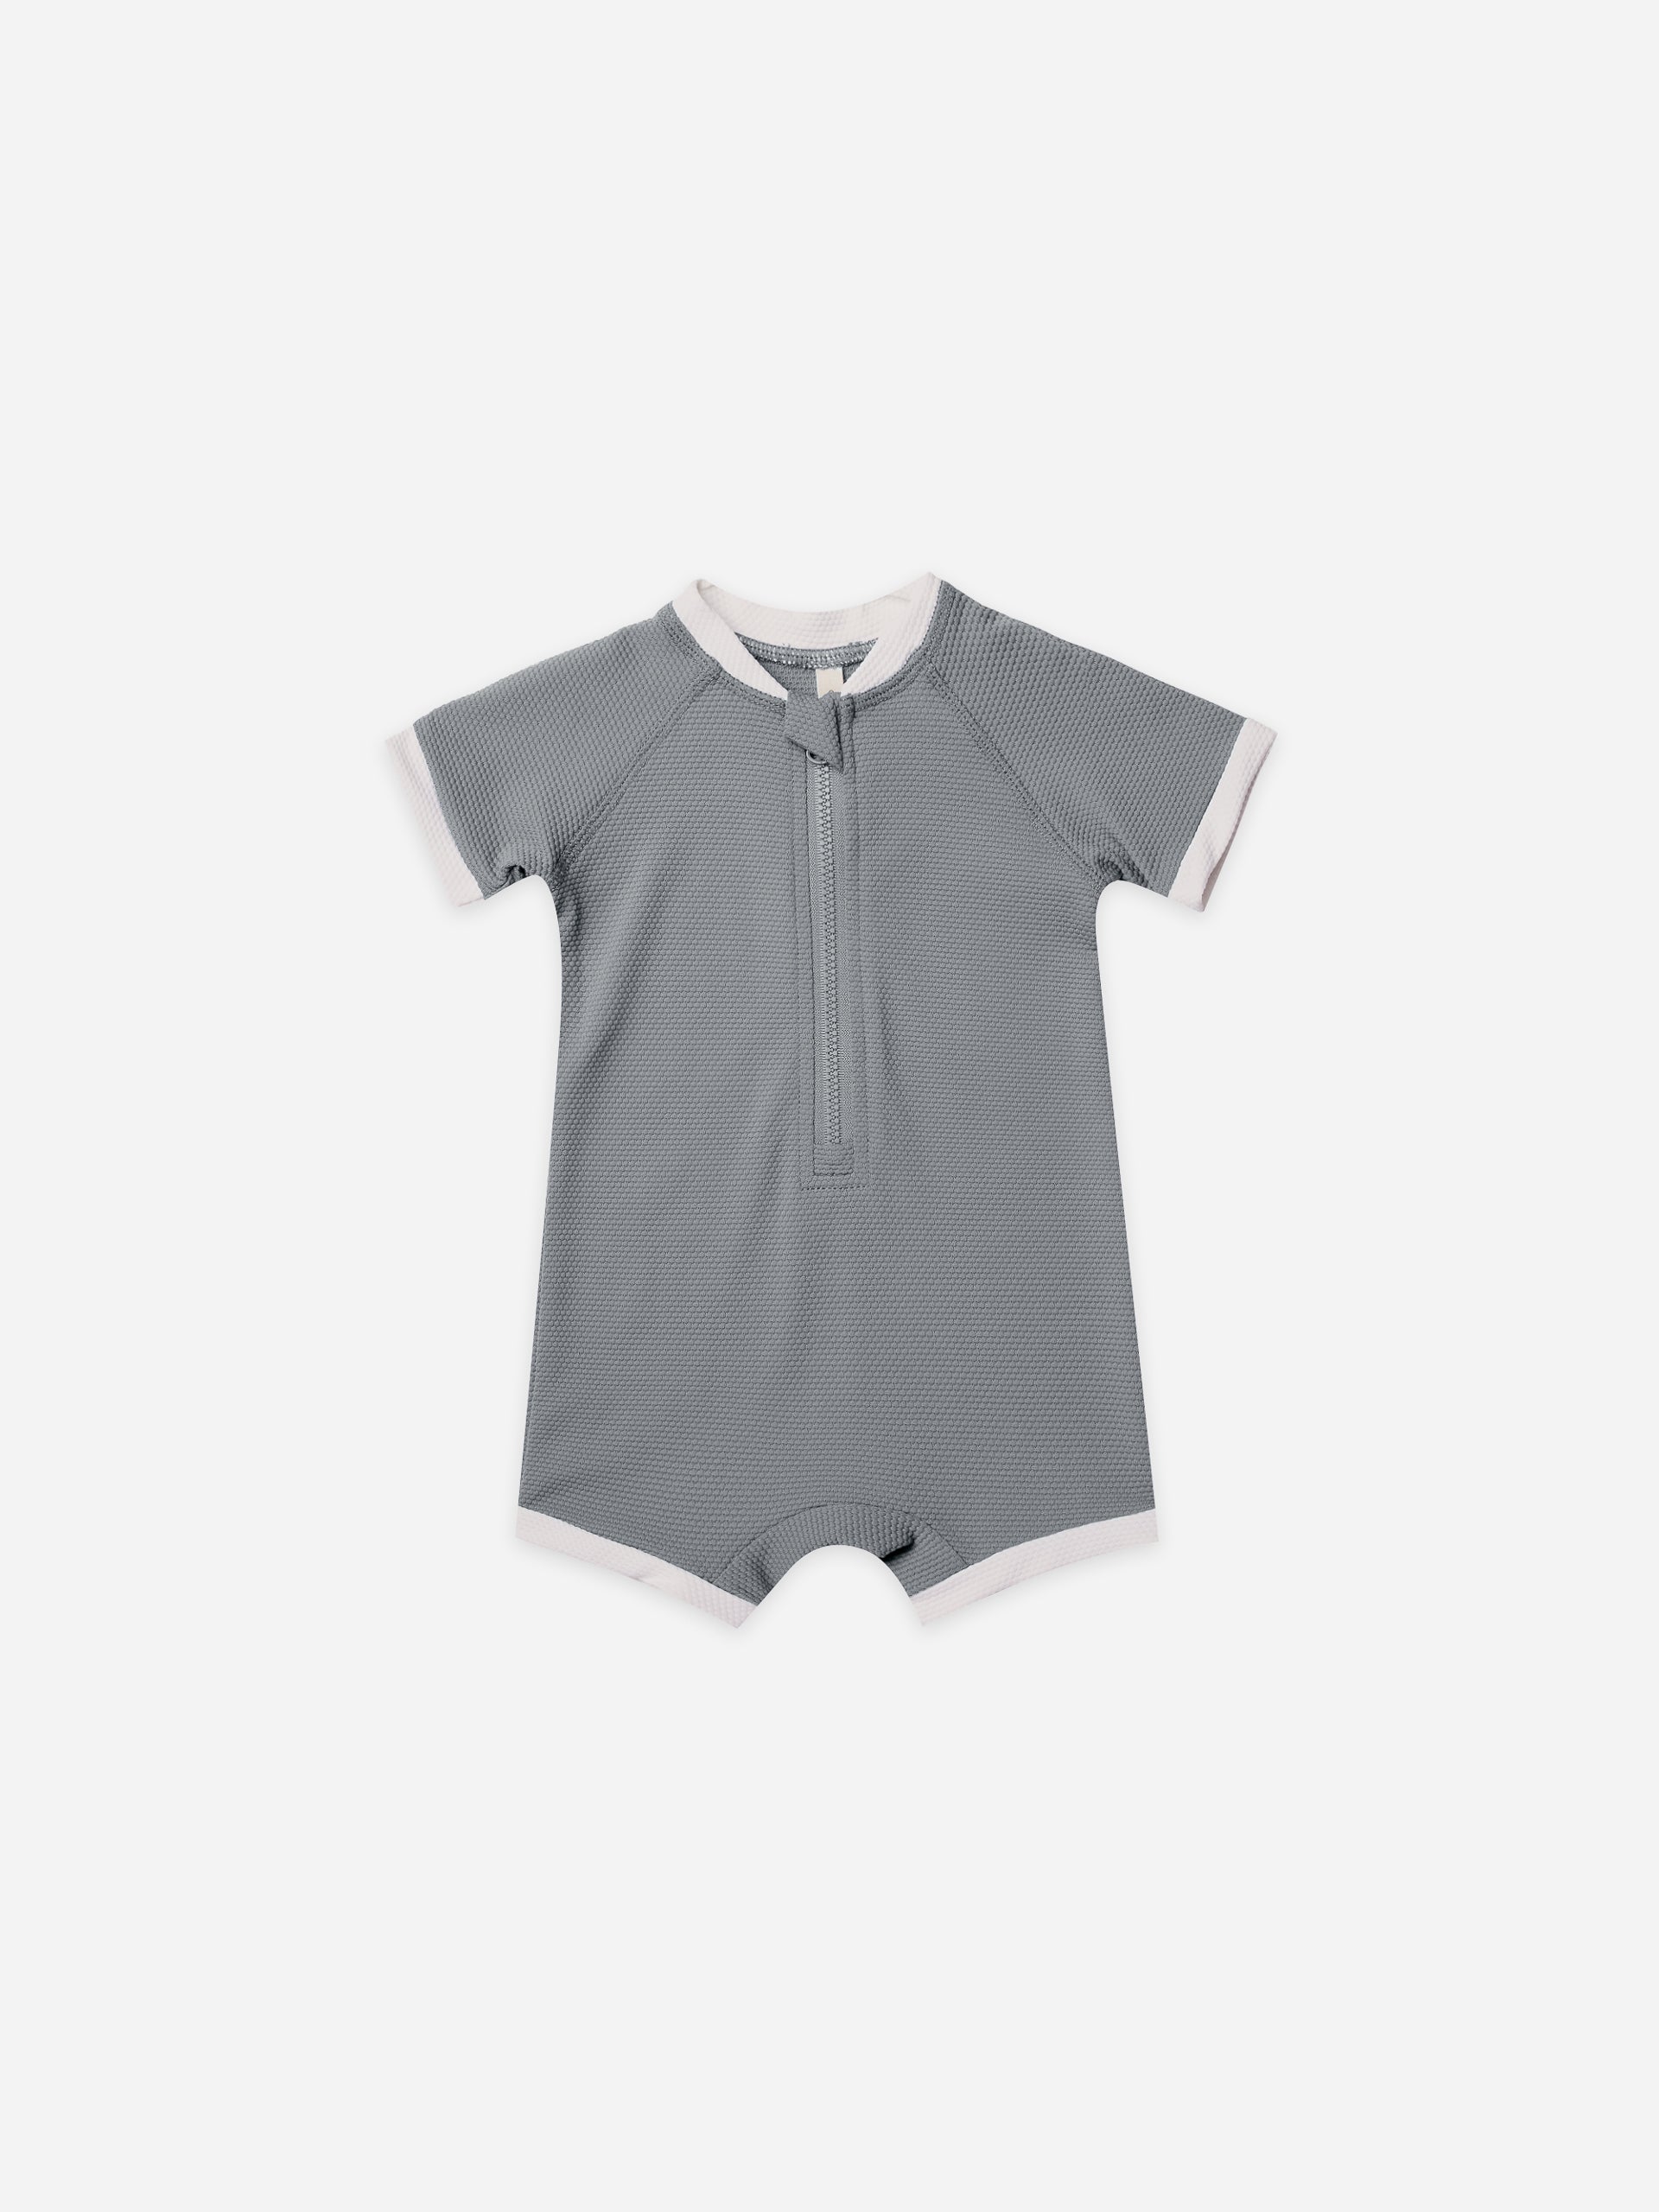 one piece rashguard | ocean - Quincy Mae | Baby Basics | Baby Clothing | Organic Baby Clothes | Modern Baby Boy Clothes |